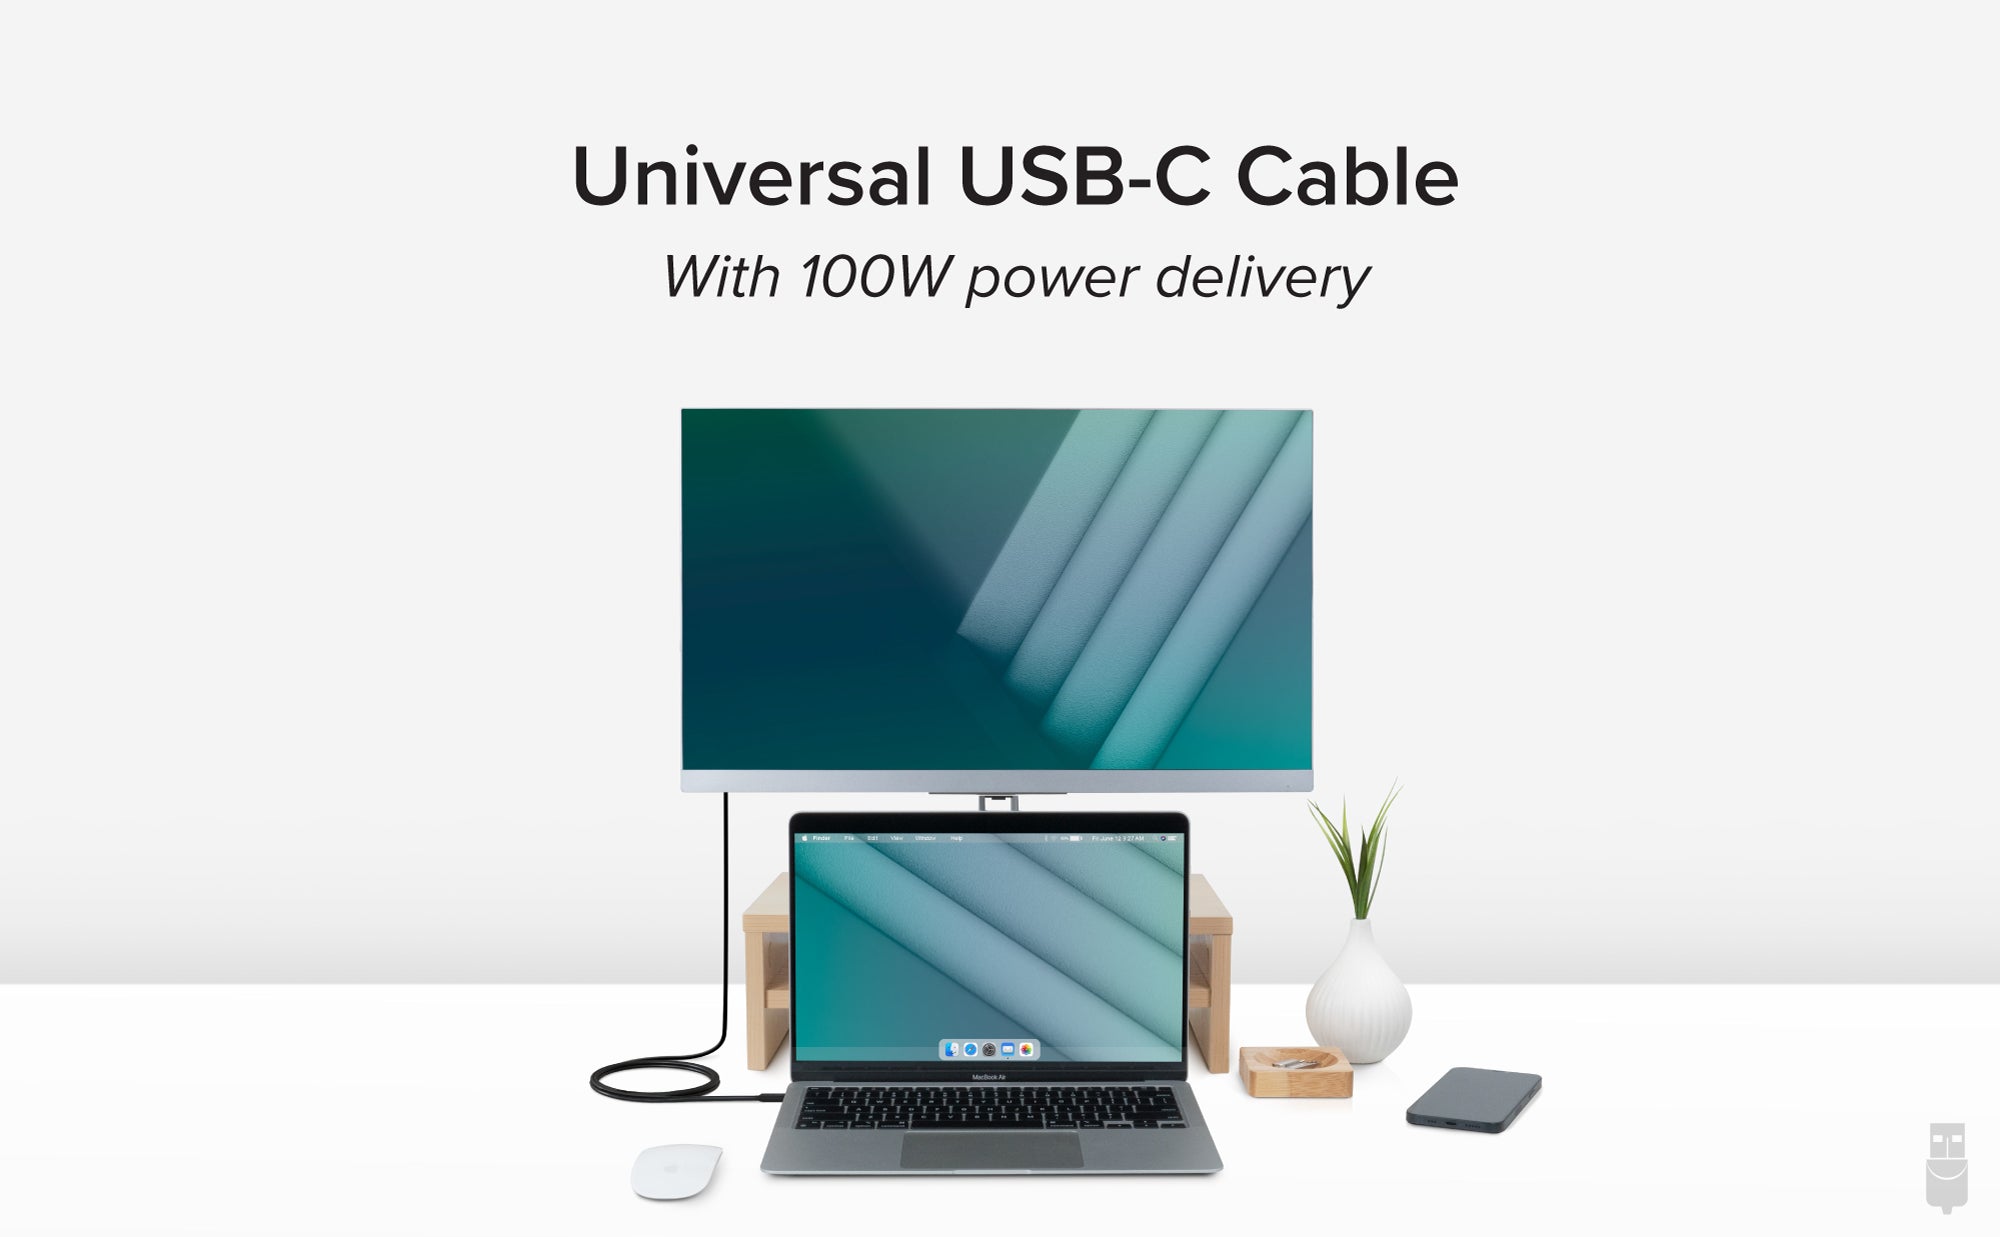 Plugable USB 3.1 Gen 2 USB-C to SATA Adapter Cable – Plugable Technologies